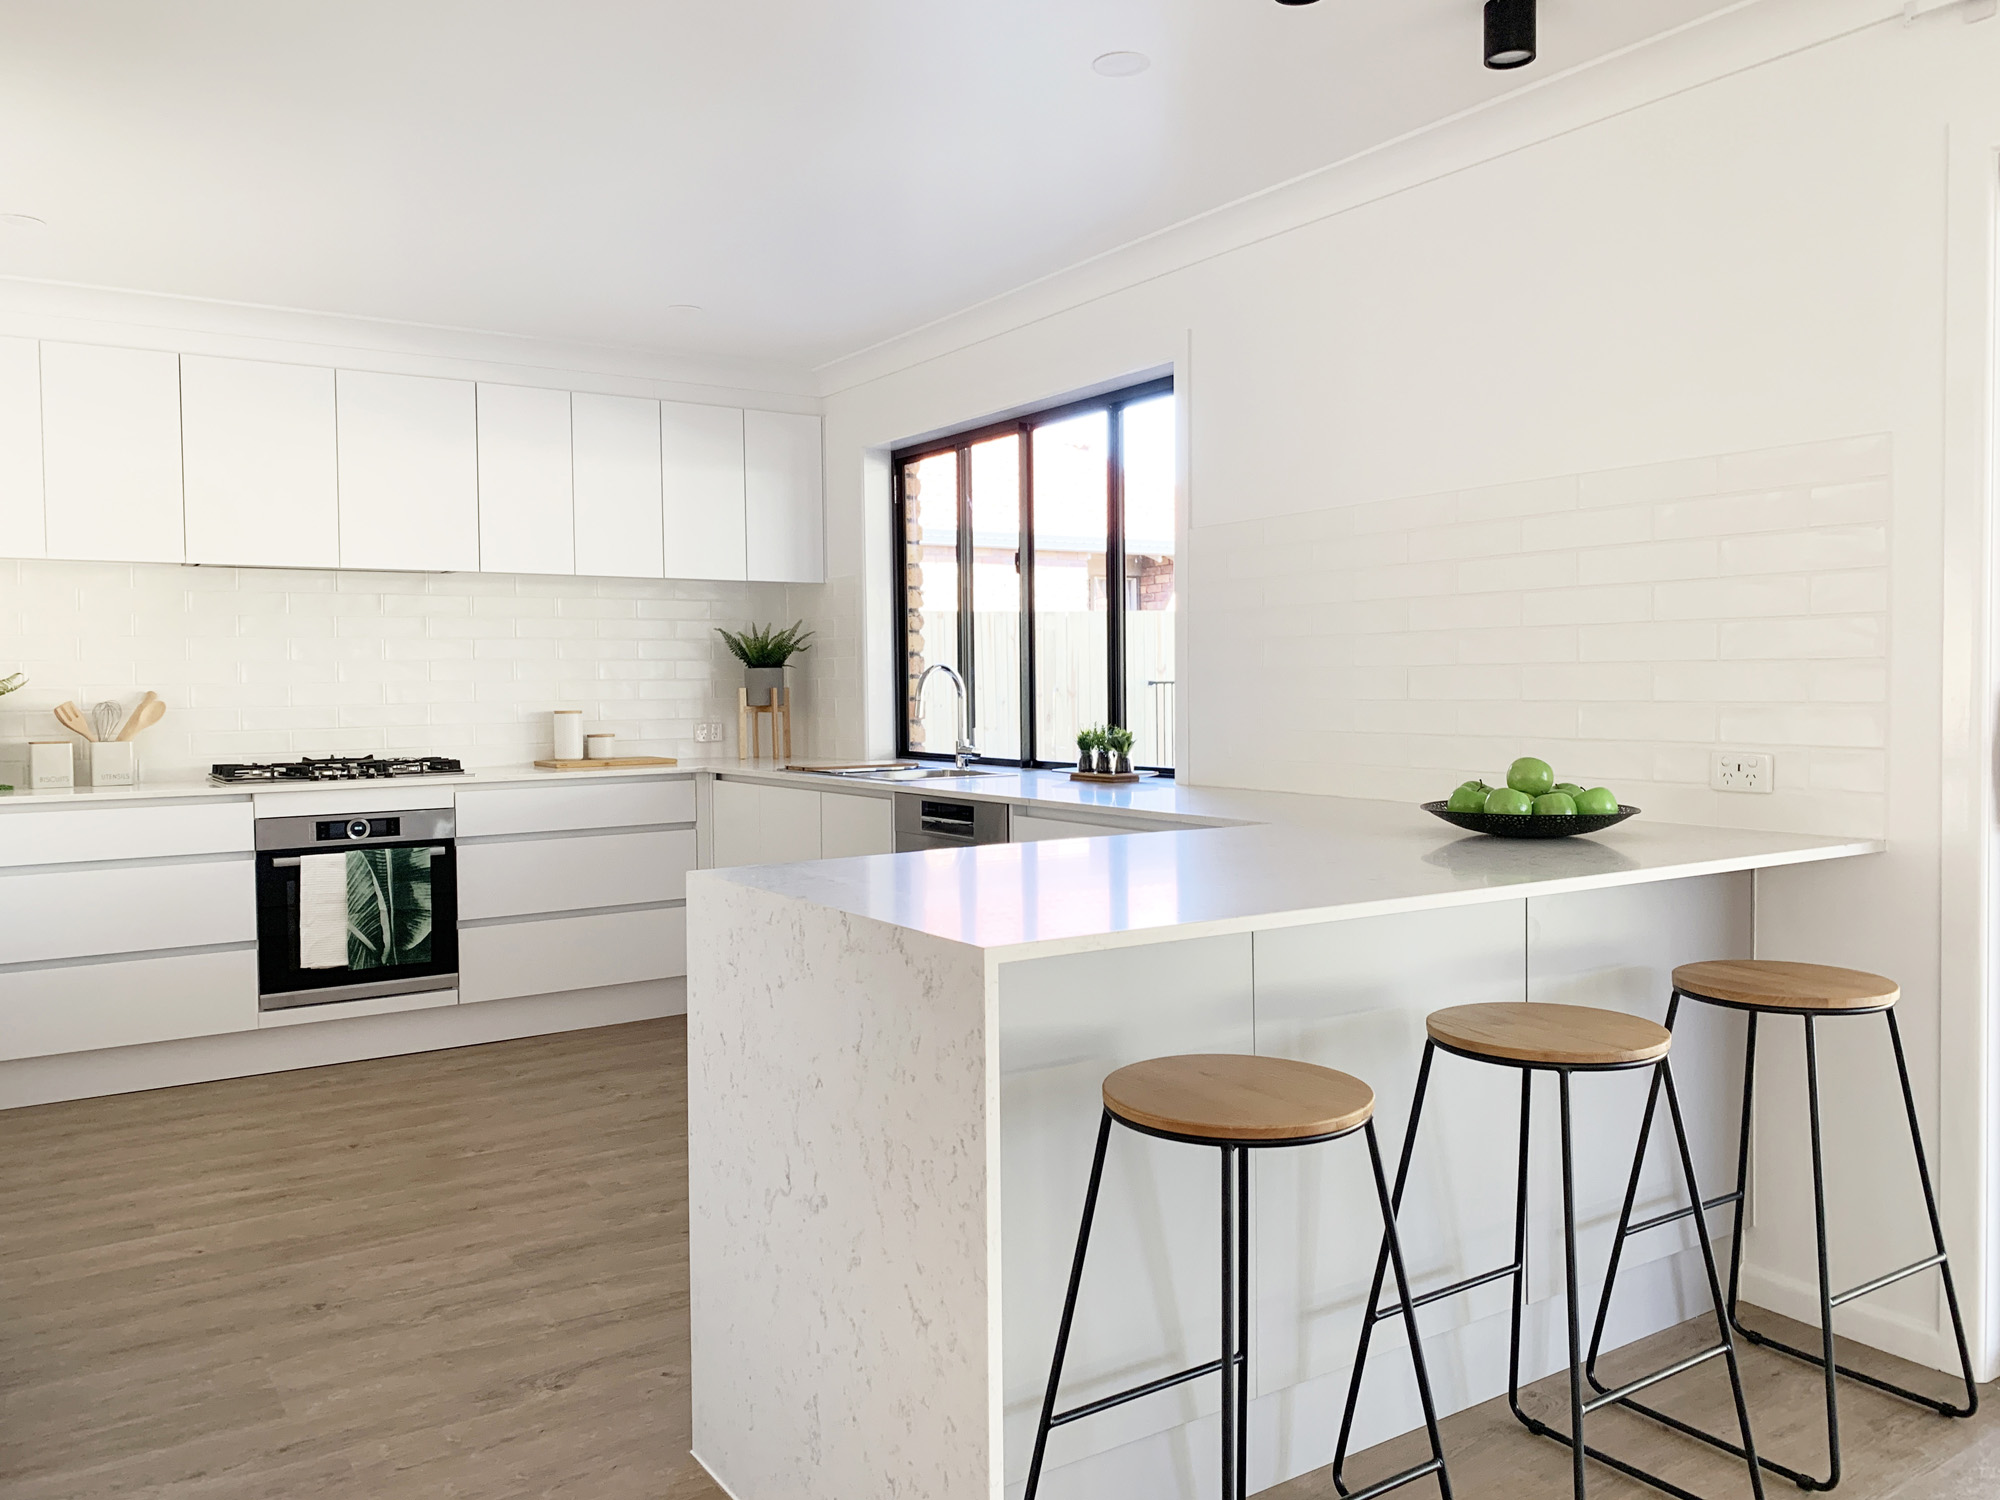 Our Kitchen Work Gallery - Brisbane Kitchens and Bathrooms